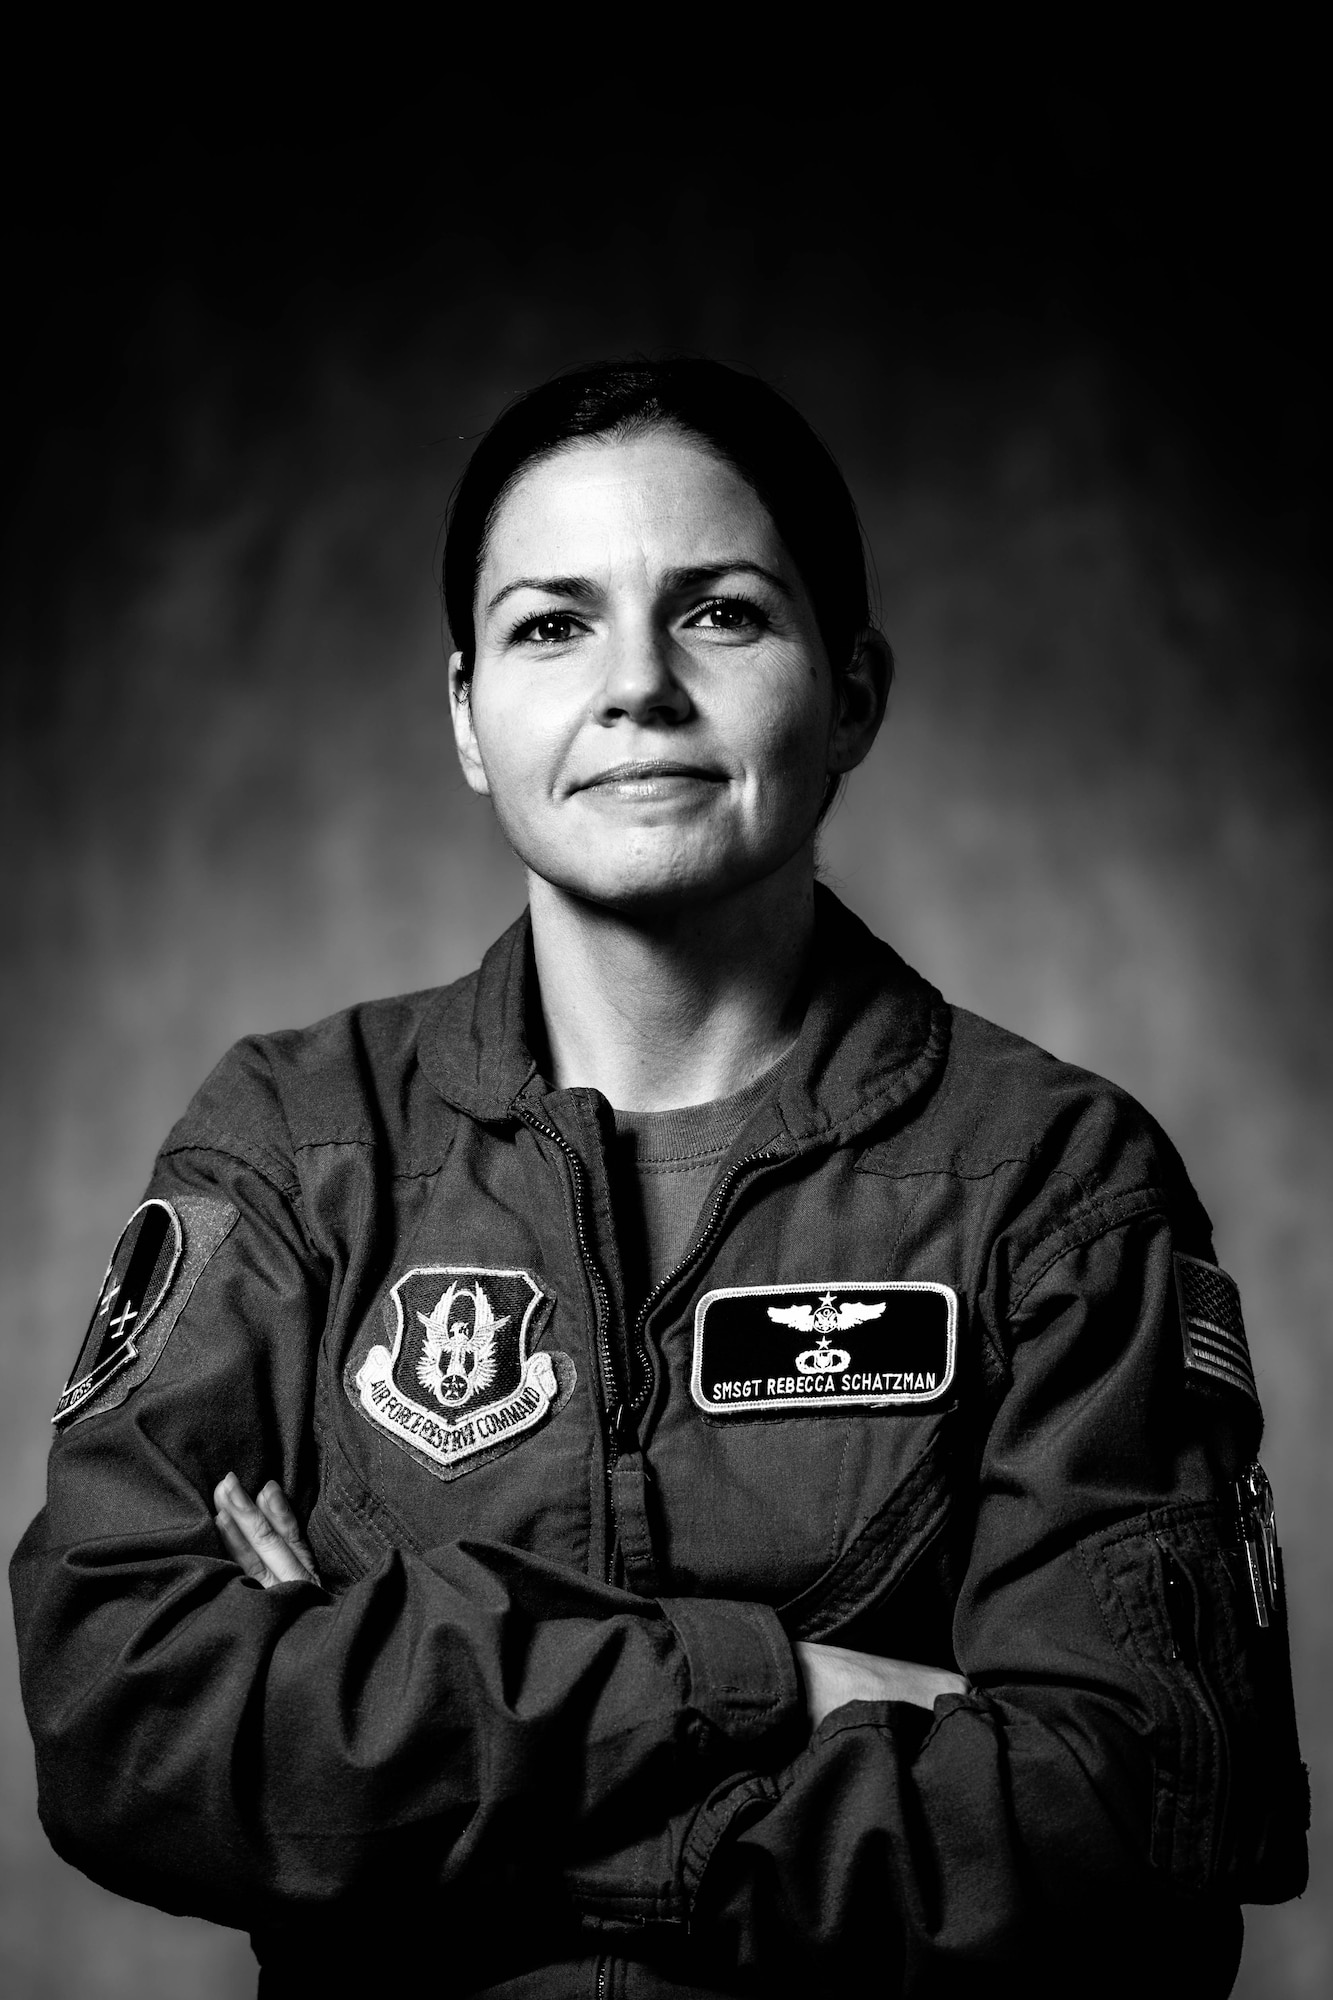 Senior Master Sgt. Rebecca Schatzman poses for a black and white portrait on a gray background